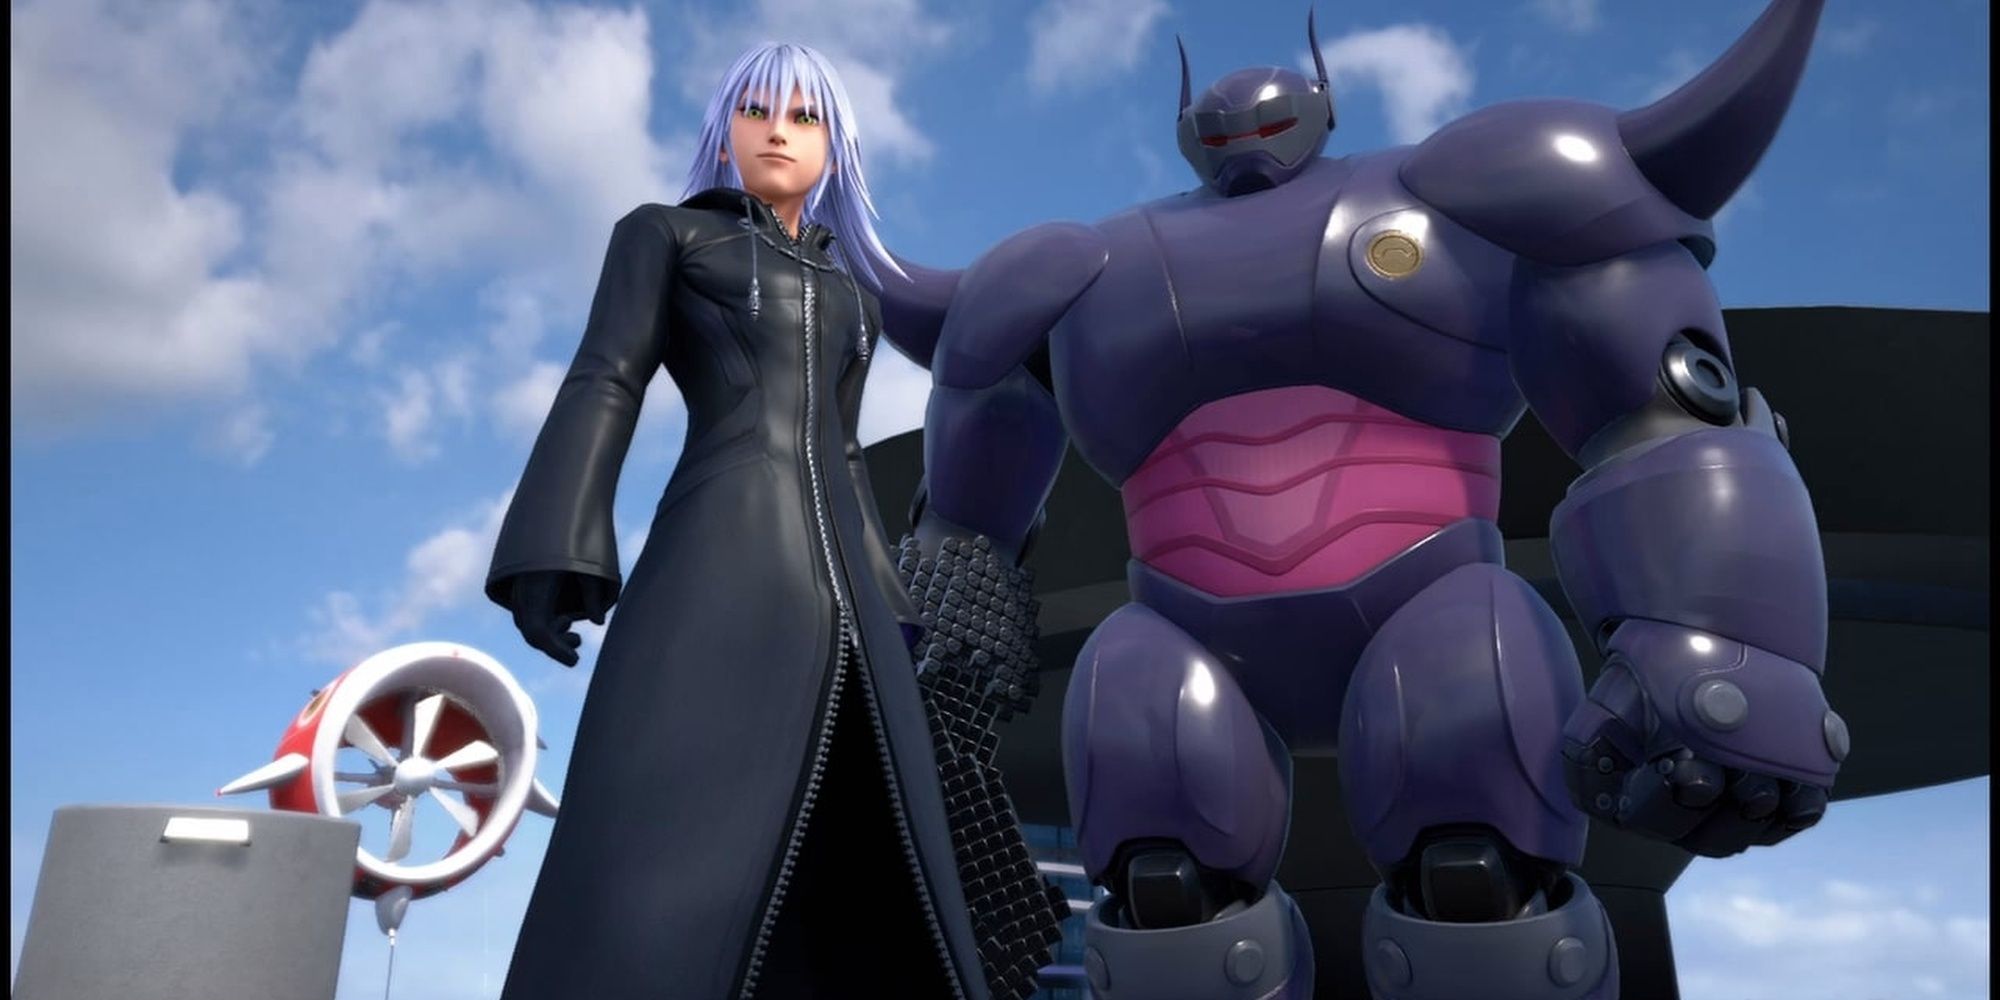 Dark Riku and Baymax in Kingdom Hearts 3